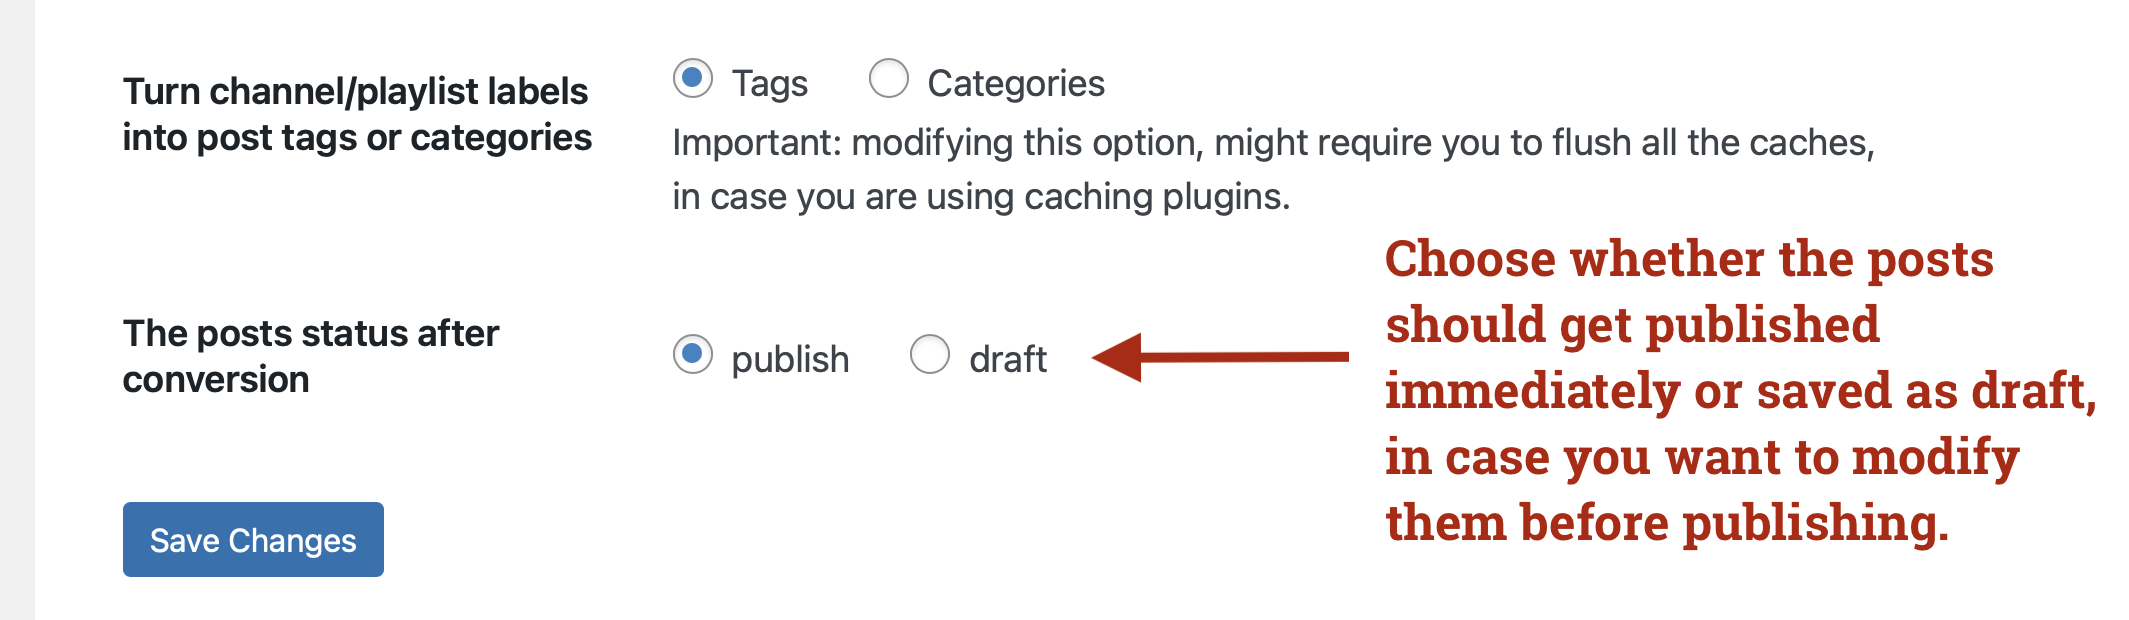 publish or draft post